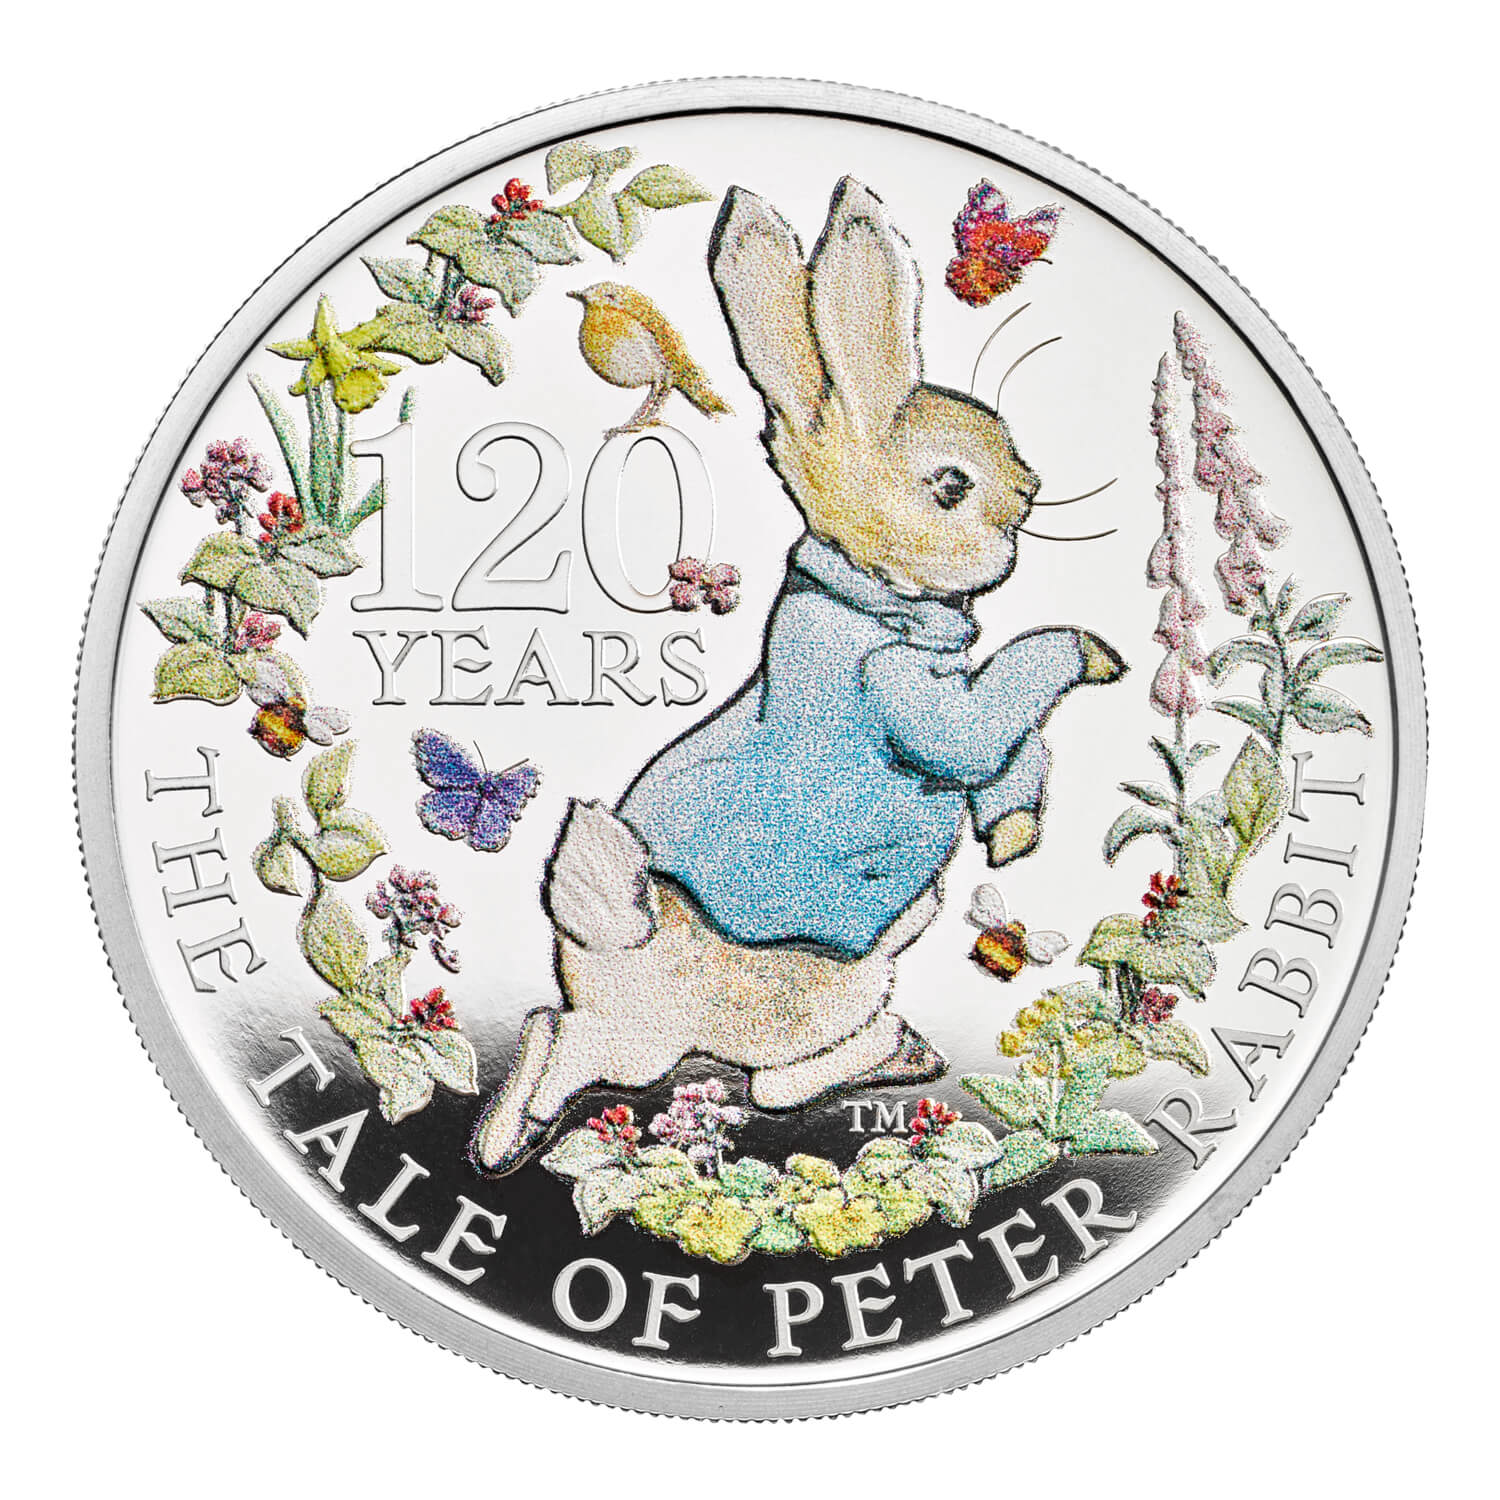 Celebrate 120 Years of Peter Rabbit™